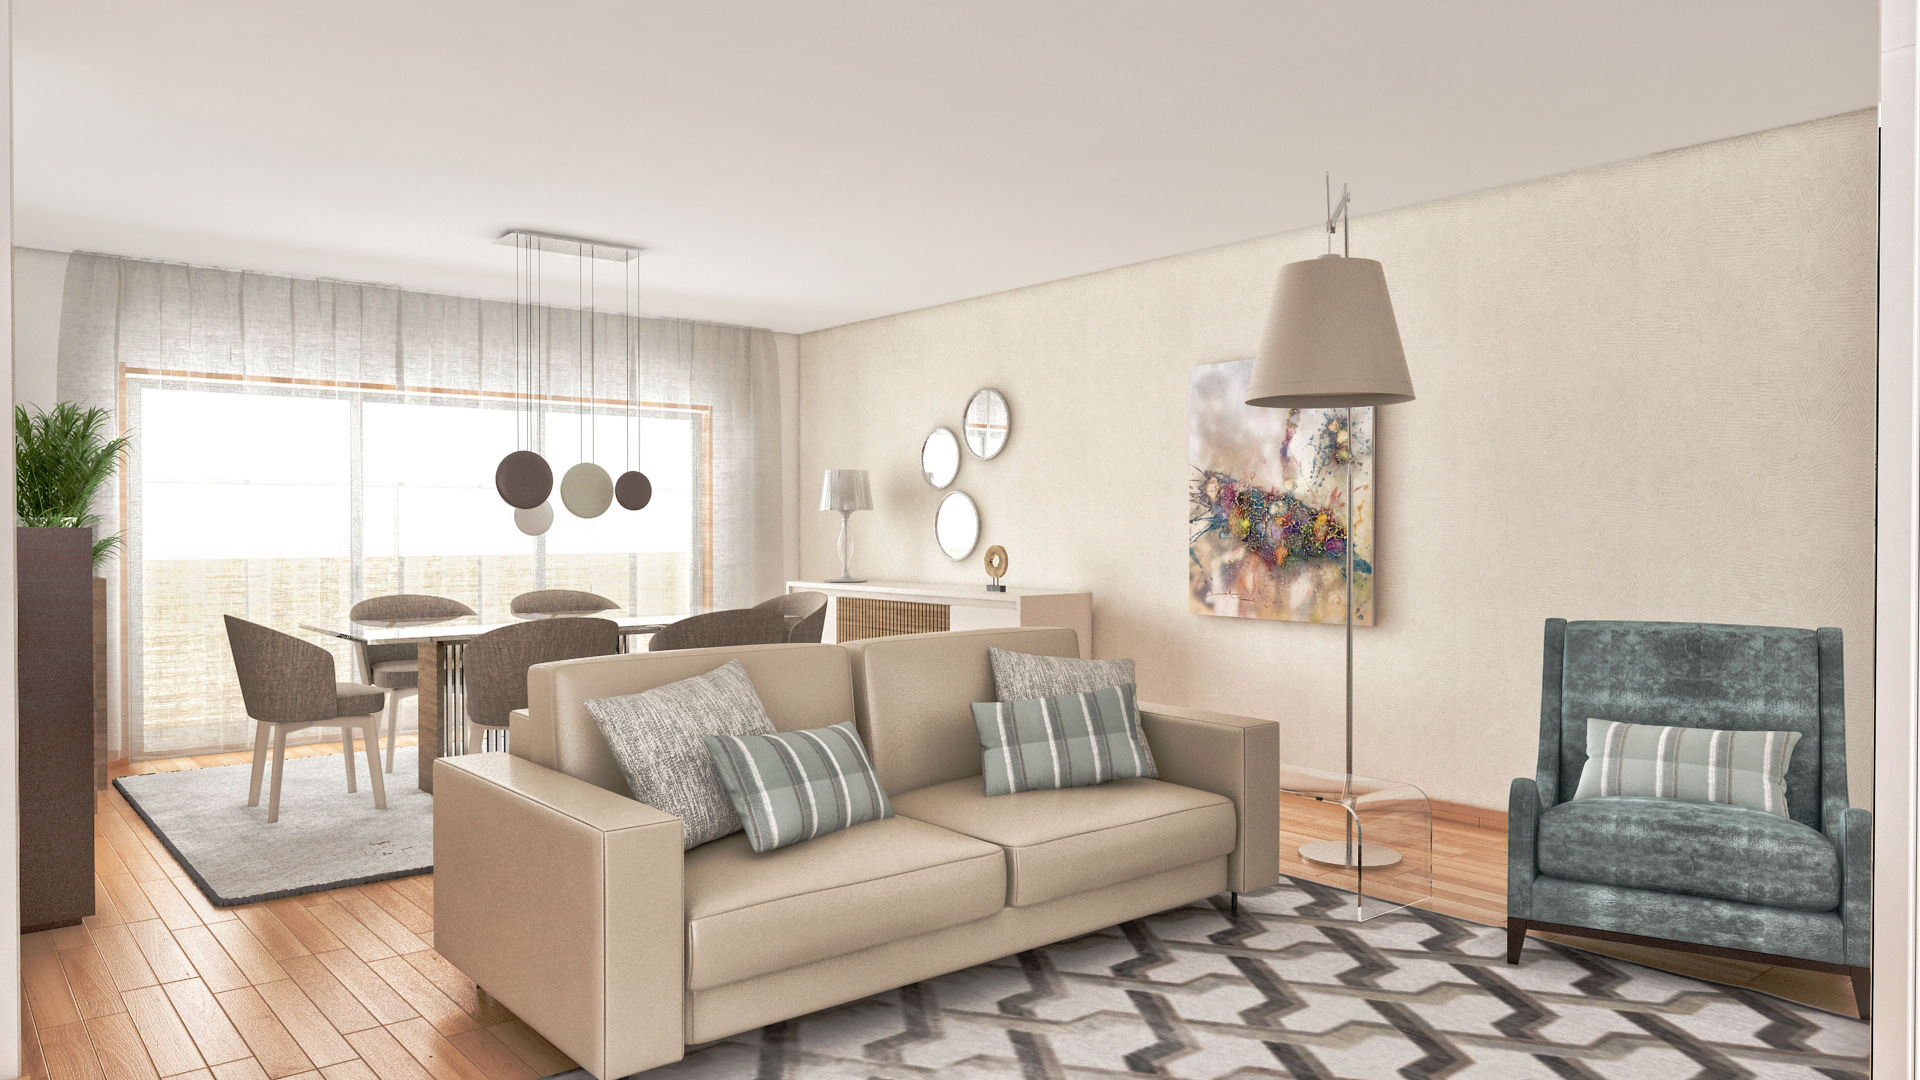 PROJETOS: 3D, INTERDOBLE BY MARTA SILVA - Design de Interiores INTERDOBLE BY MARTA SILVA - Design de Interiores Ruang Keluarga Klasik